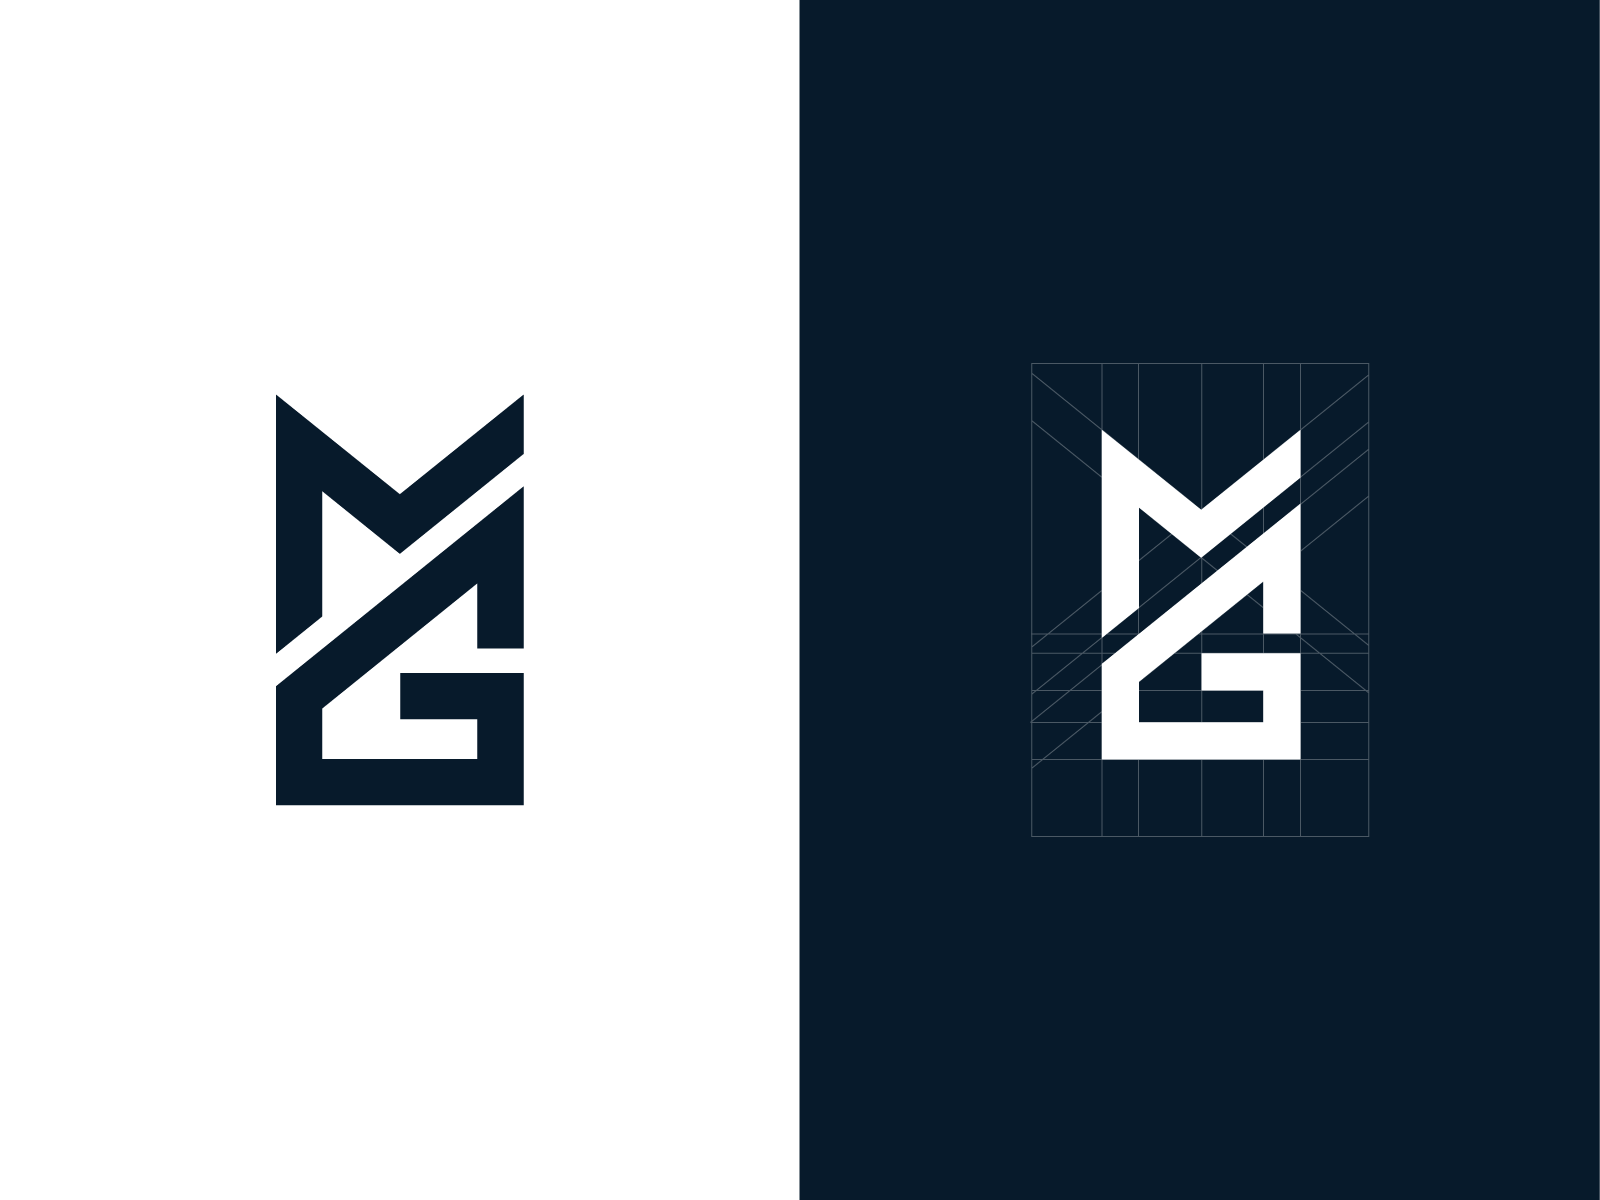 MG Monogram Logo by Sujit Debnath on Dribbble